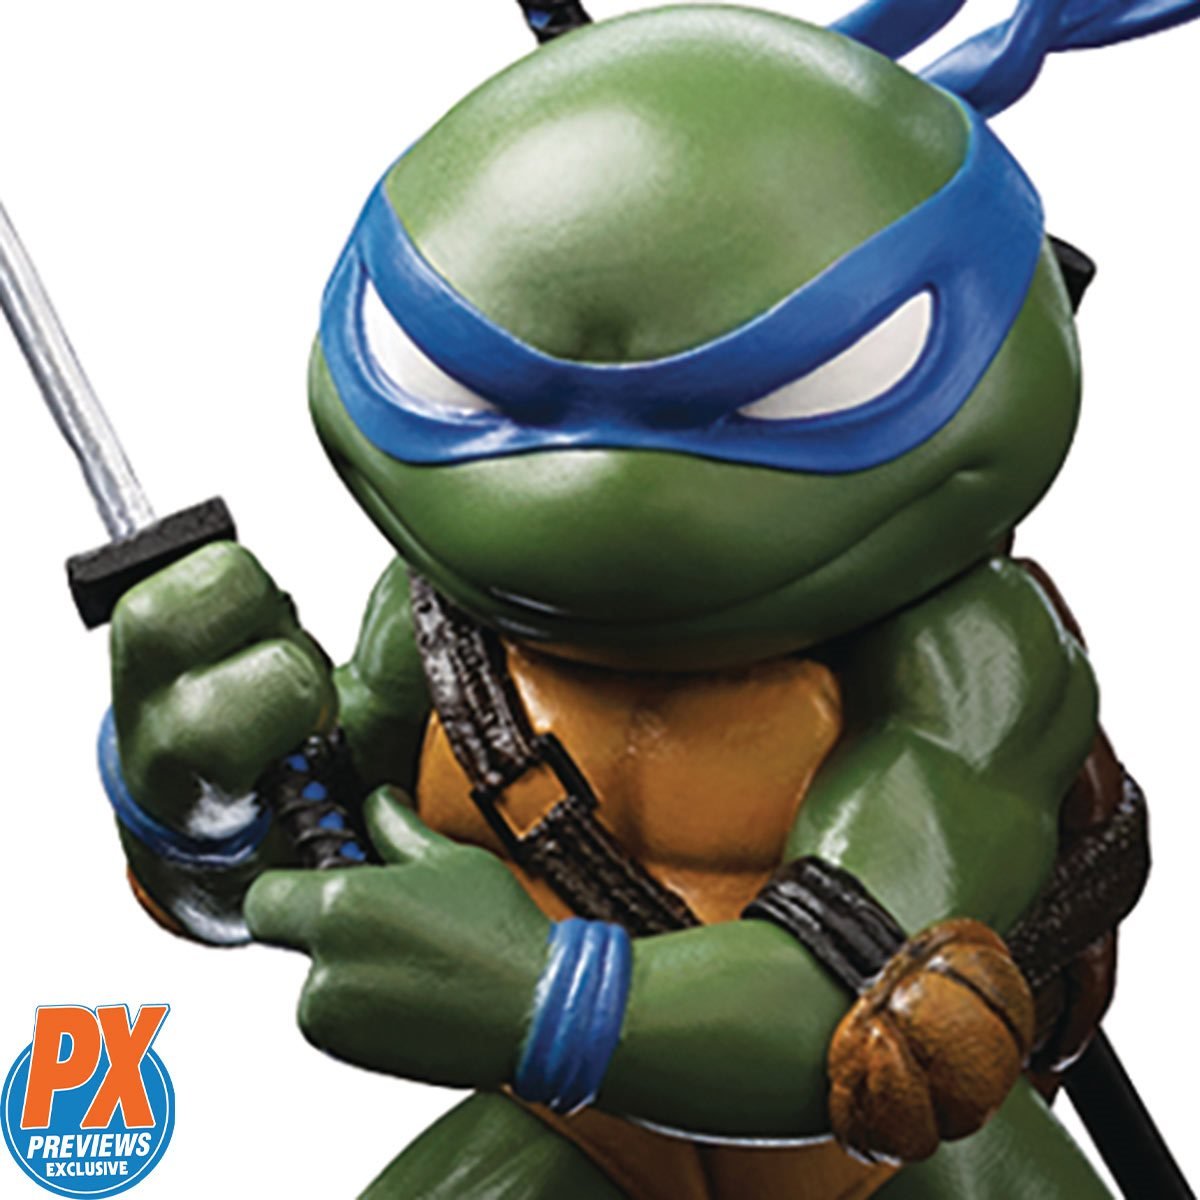 Teenage Mutant Ninja Turtles (Retro) D-Formz Box Set - 2023 San